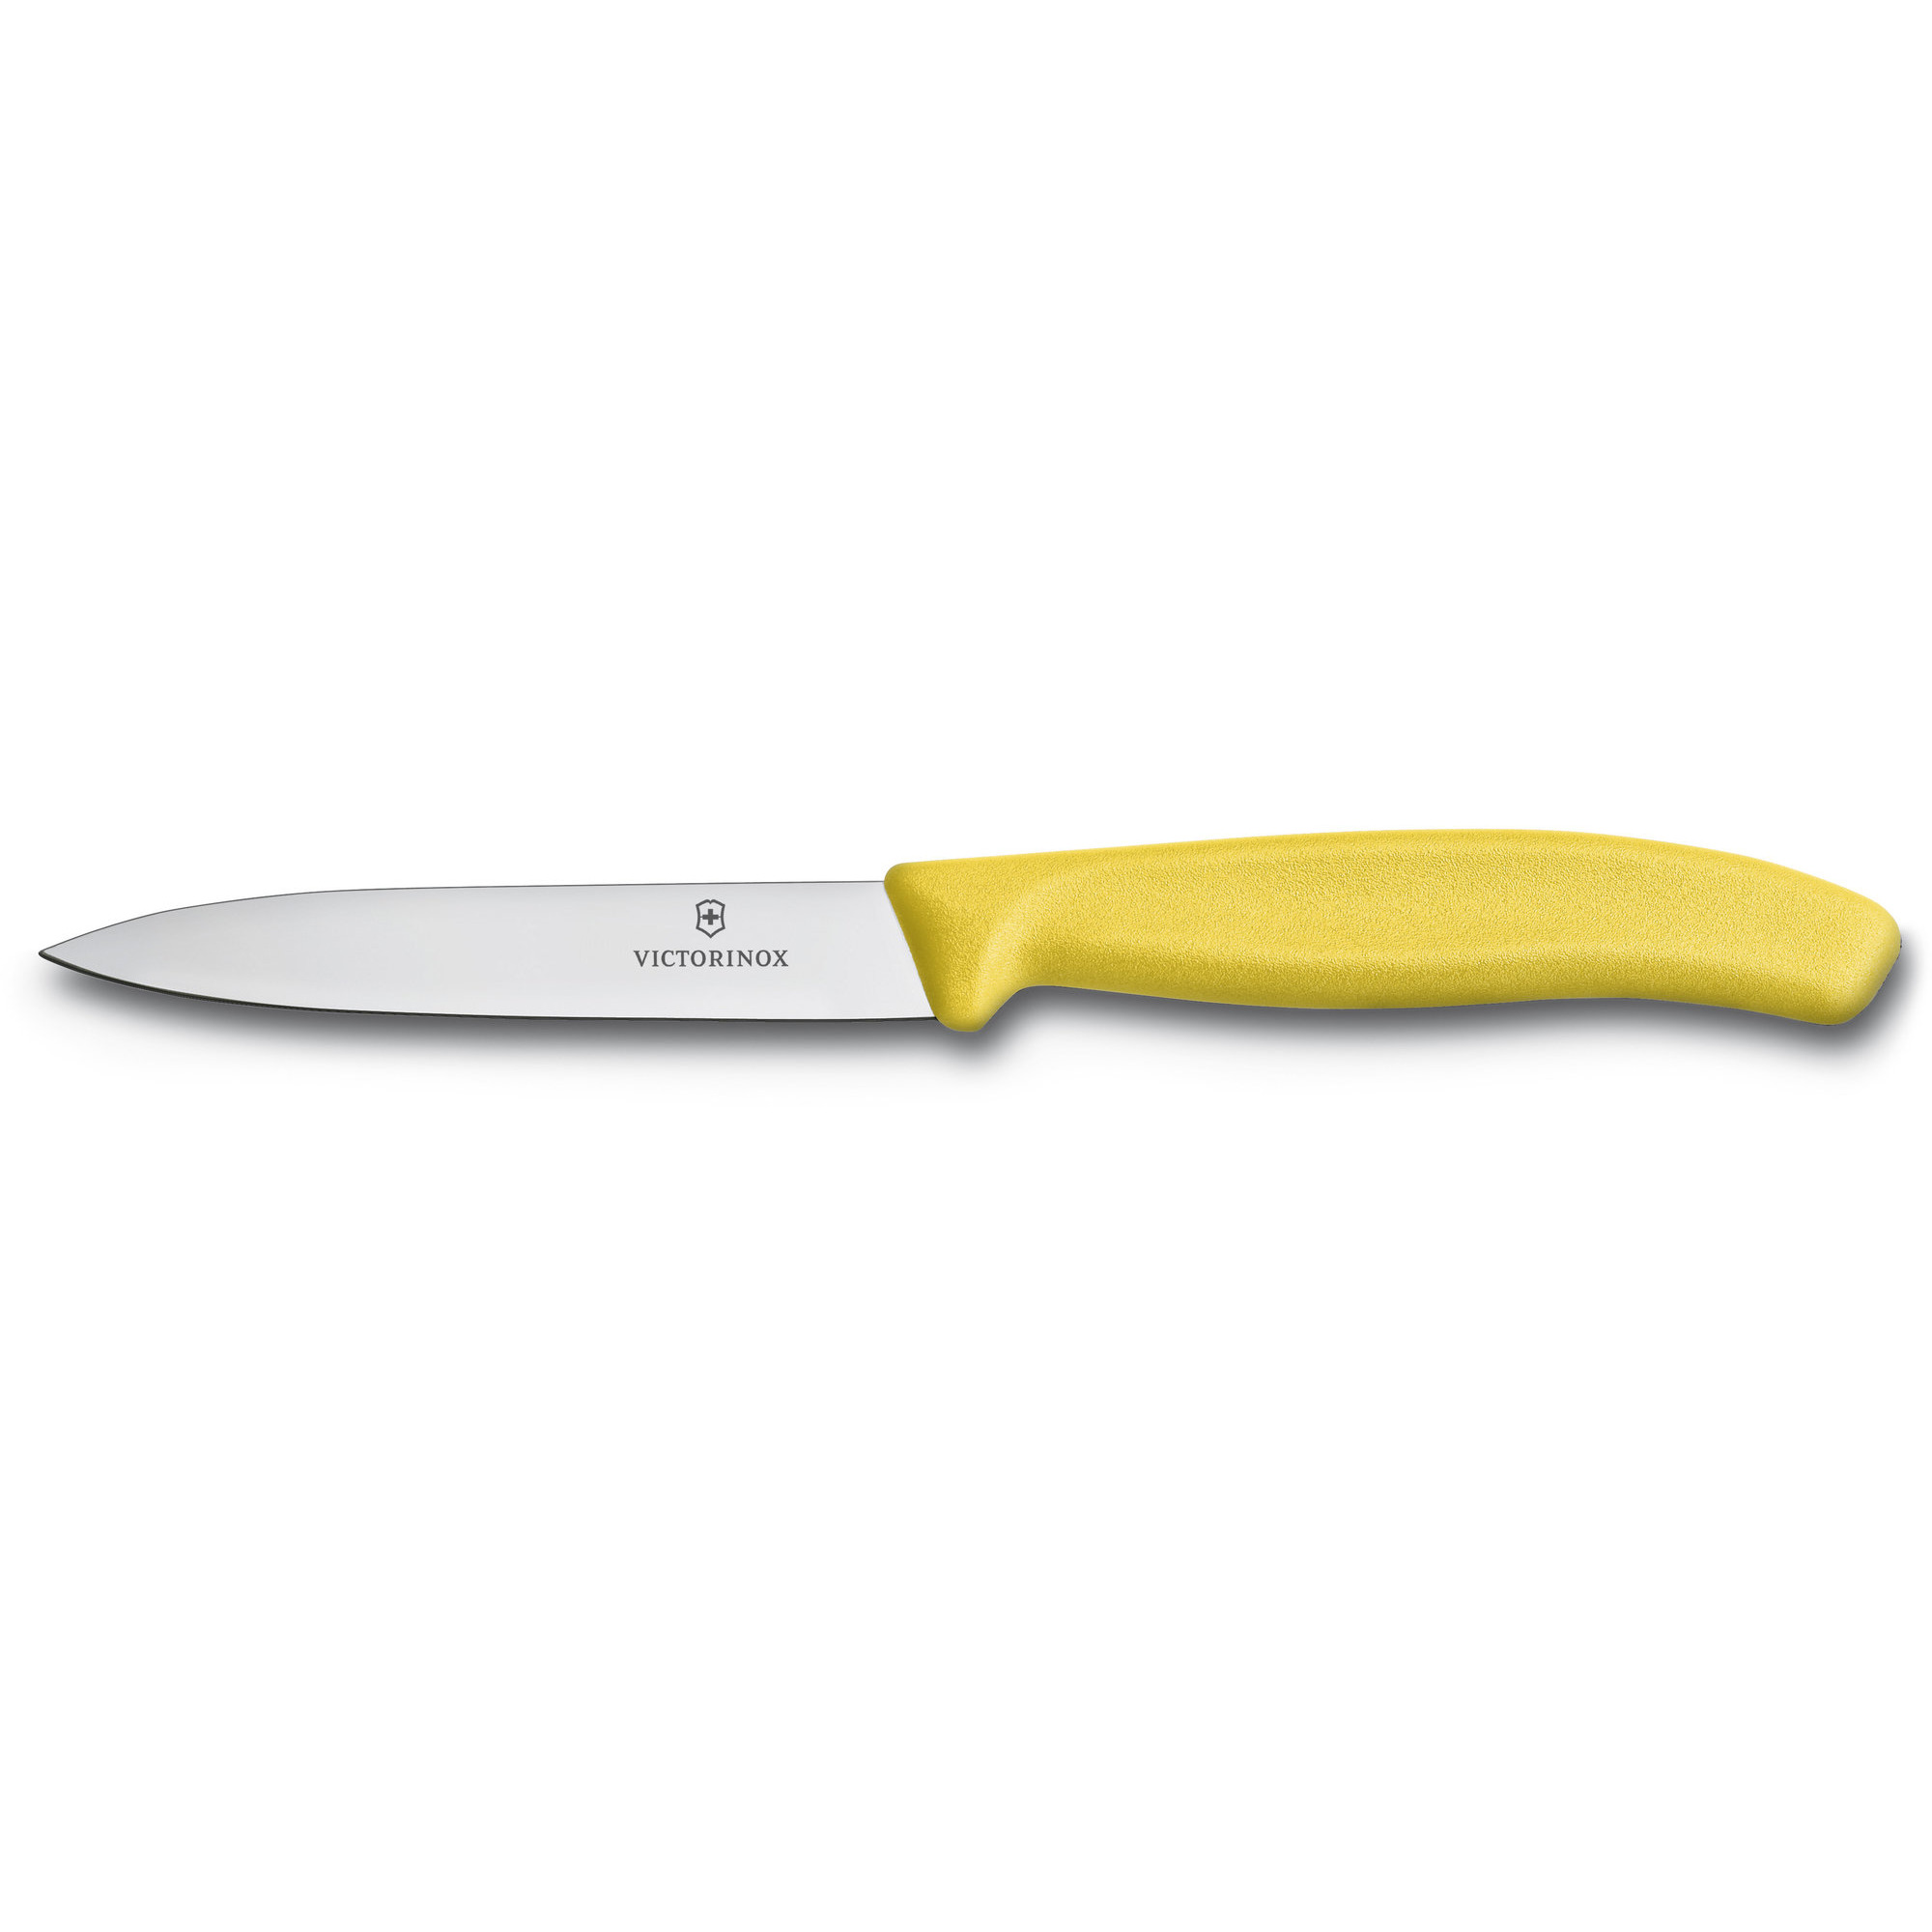 Victorinox Grøntsags- og skrællekniv med nylonhåndtag i gul, 10 cm.